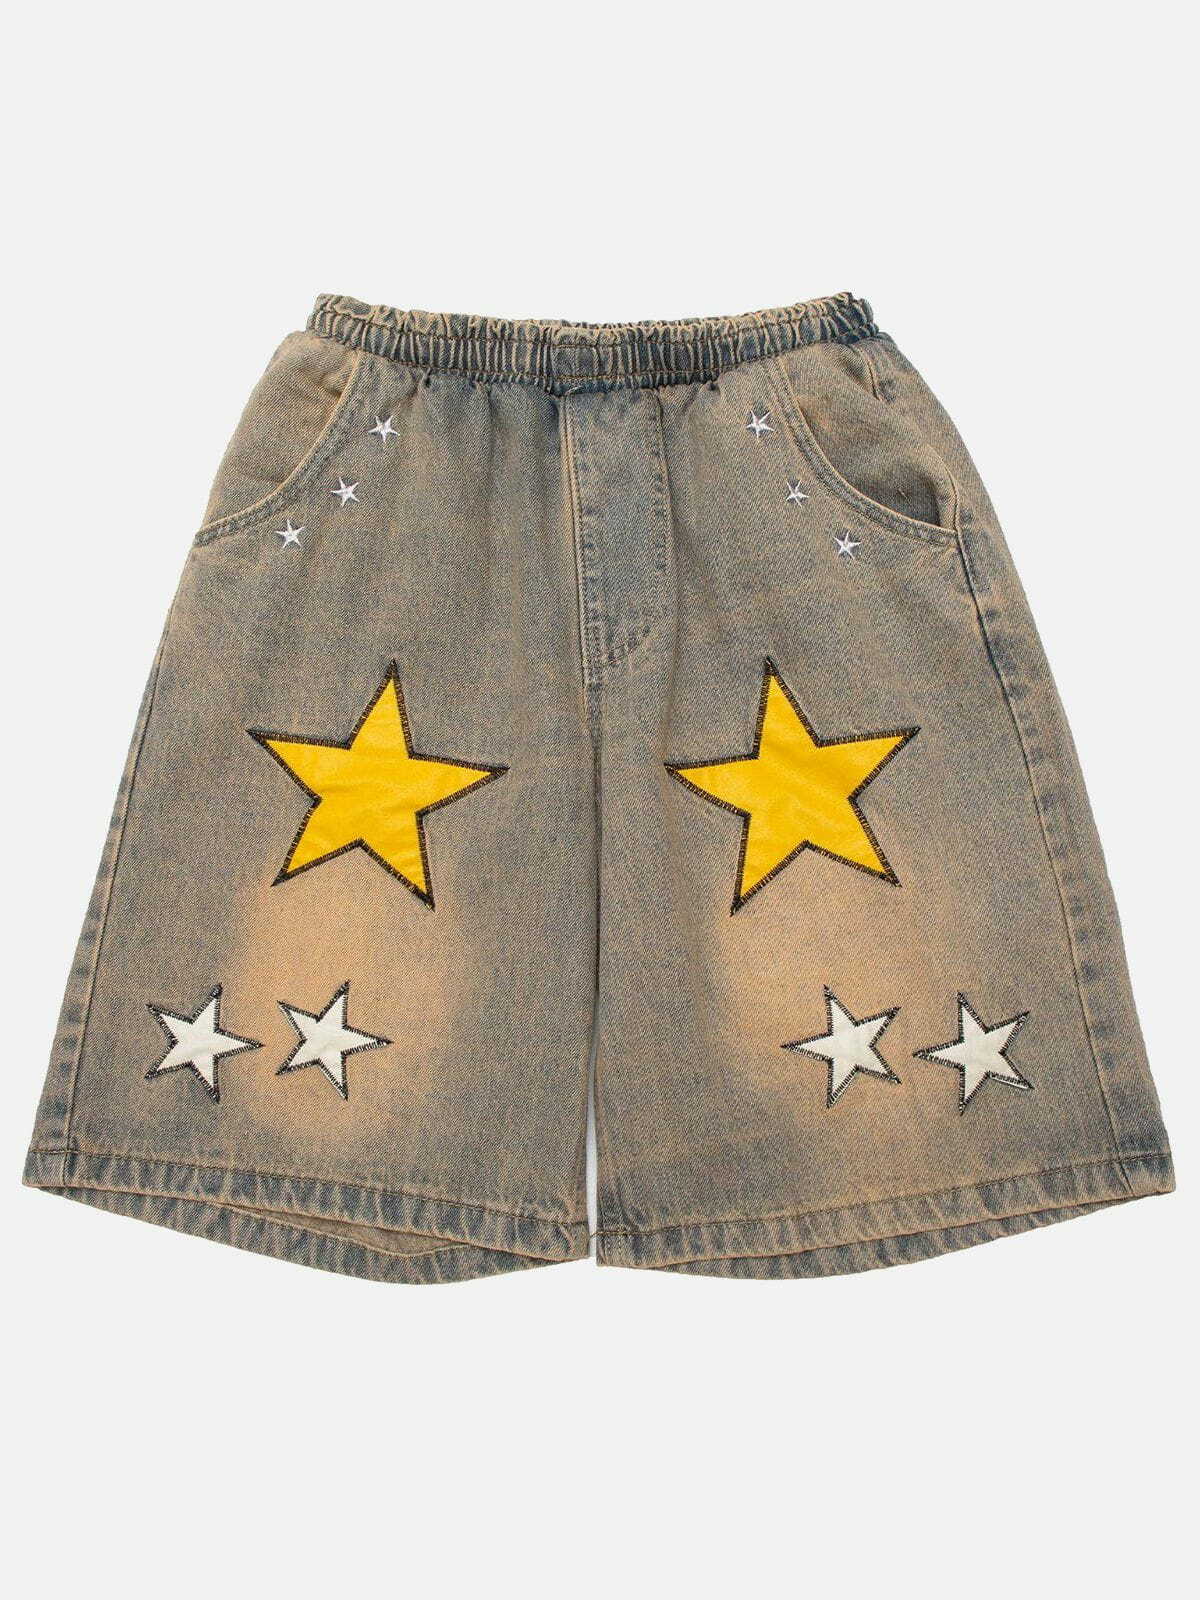 retro stars shorts chic and vibrant y2k fashion 2474